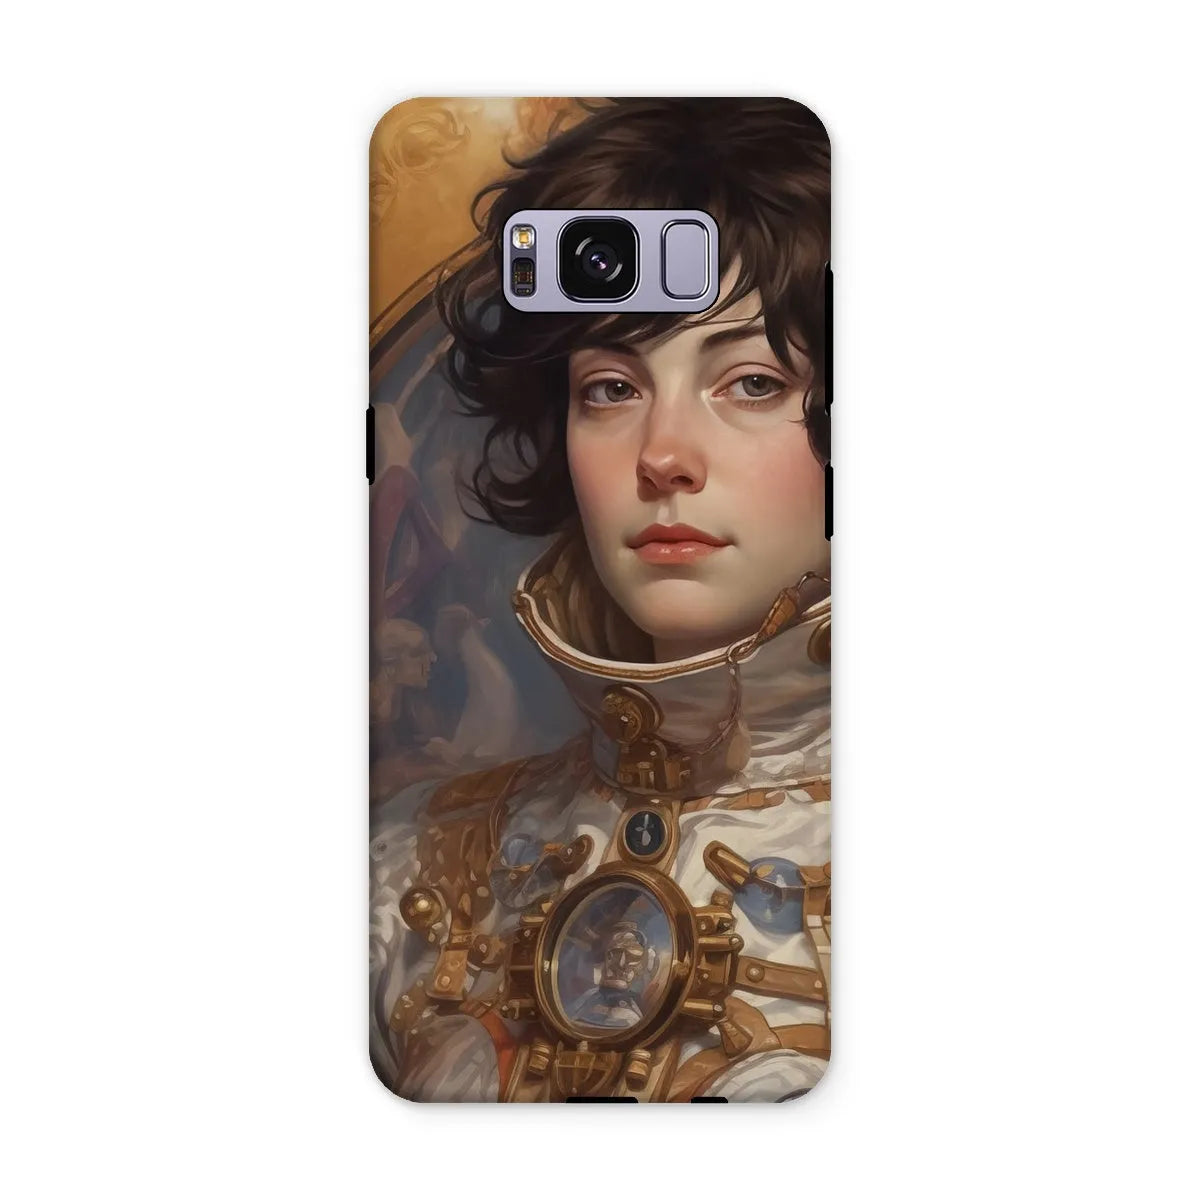 Chloé The Lesbian Astronaut - Space Aesthetic Art Phone Case - Samsung Galaxy S8 Plus / Matte - Mobile Phone Cases